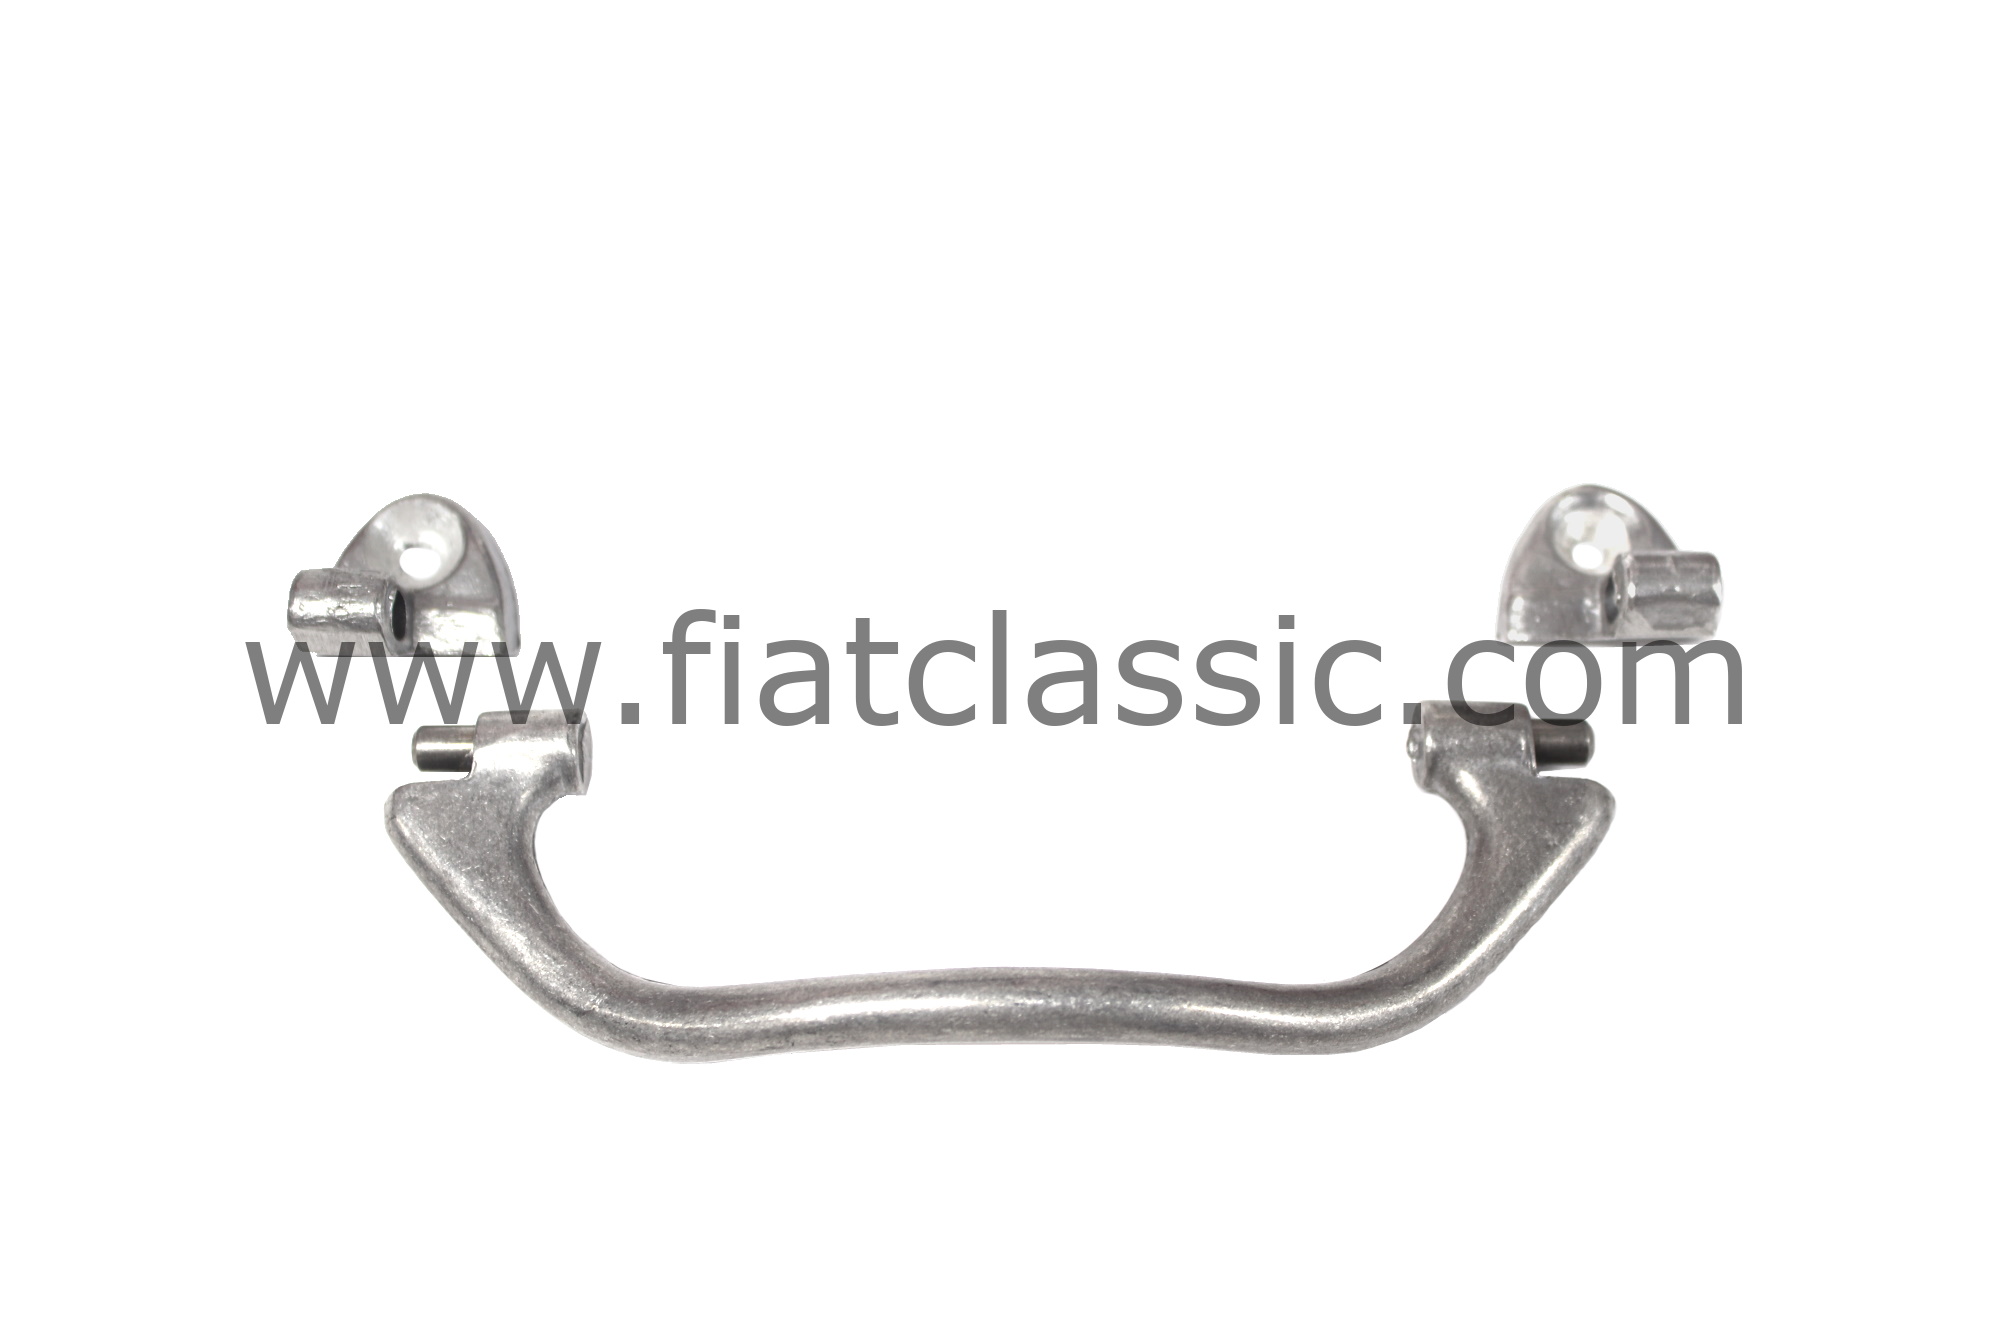 Fiat 126 - Fiat 500 - Fiat 600 light alloy locking handle